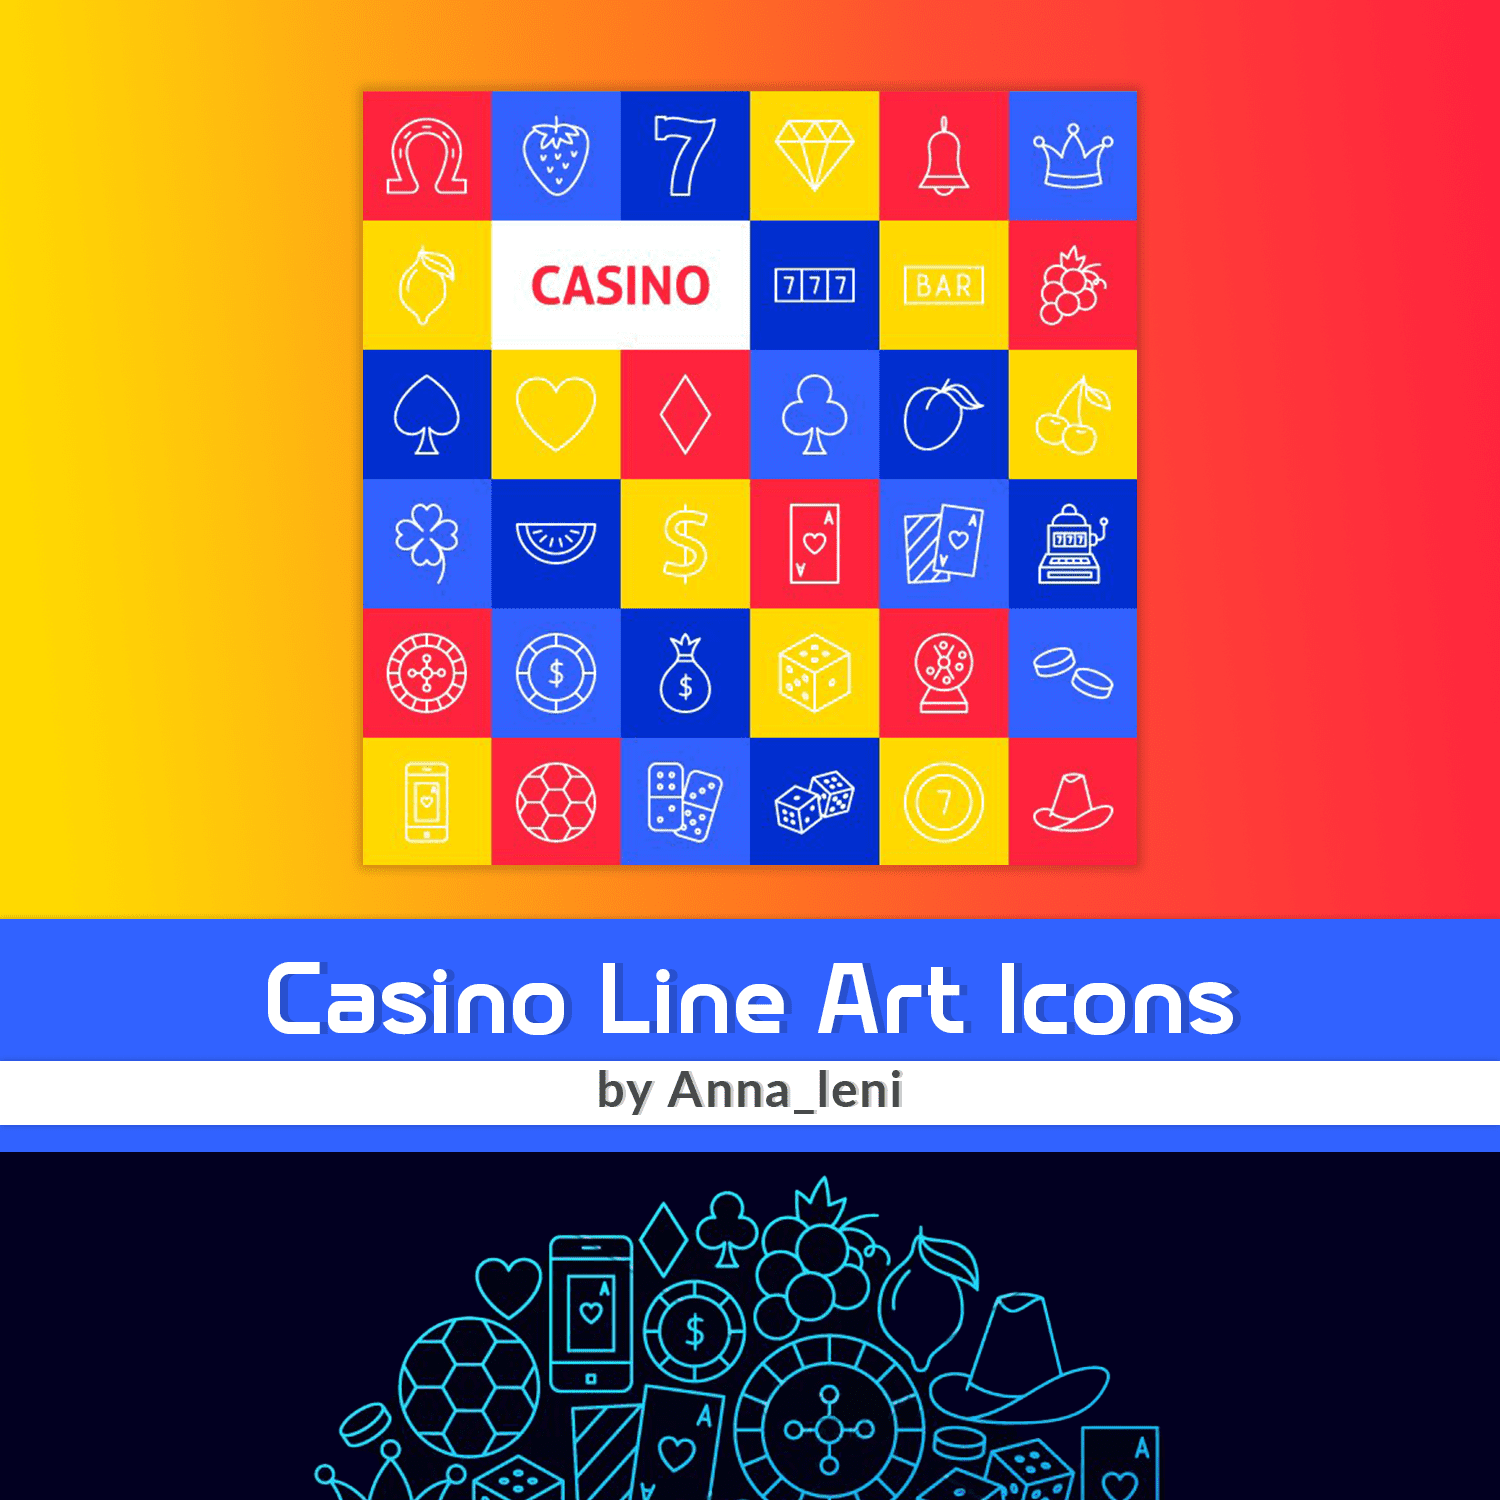 Casino Line Art Icons.